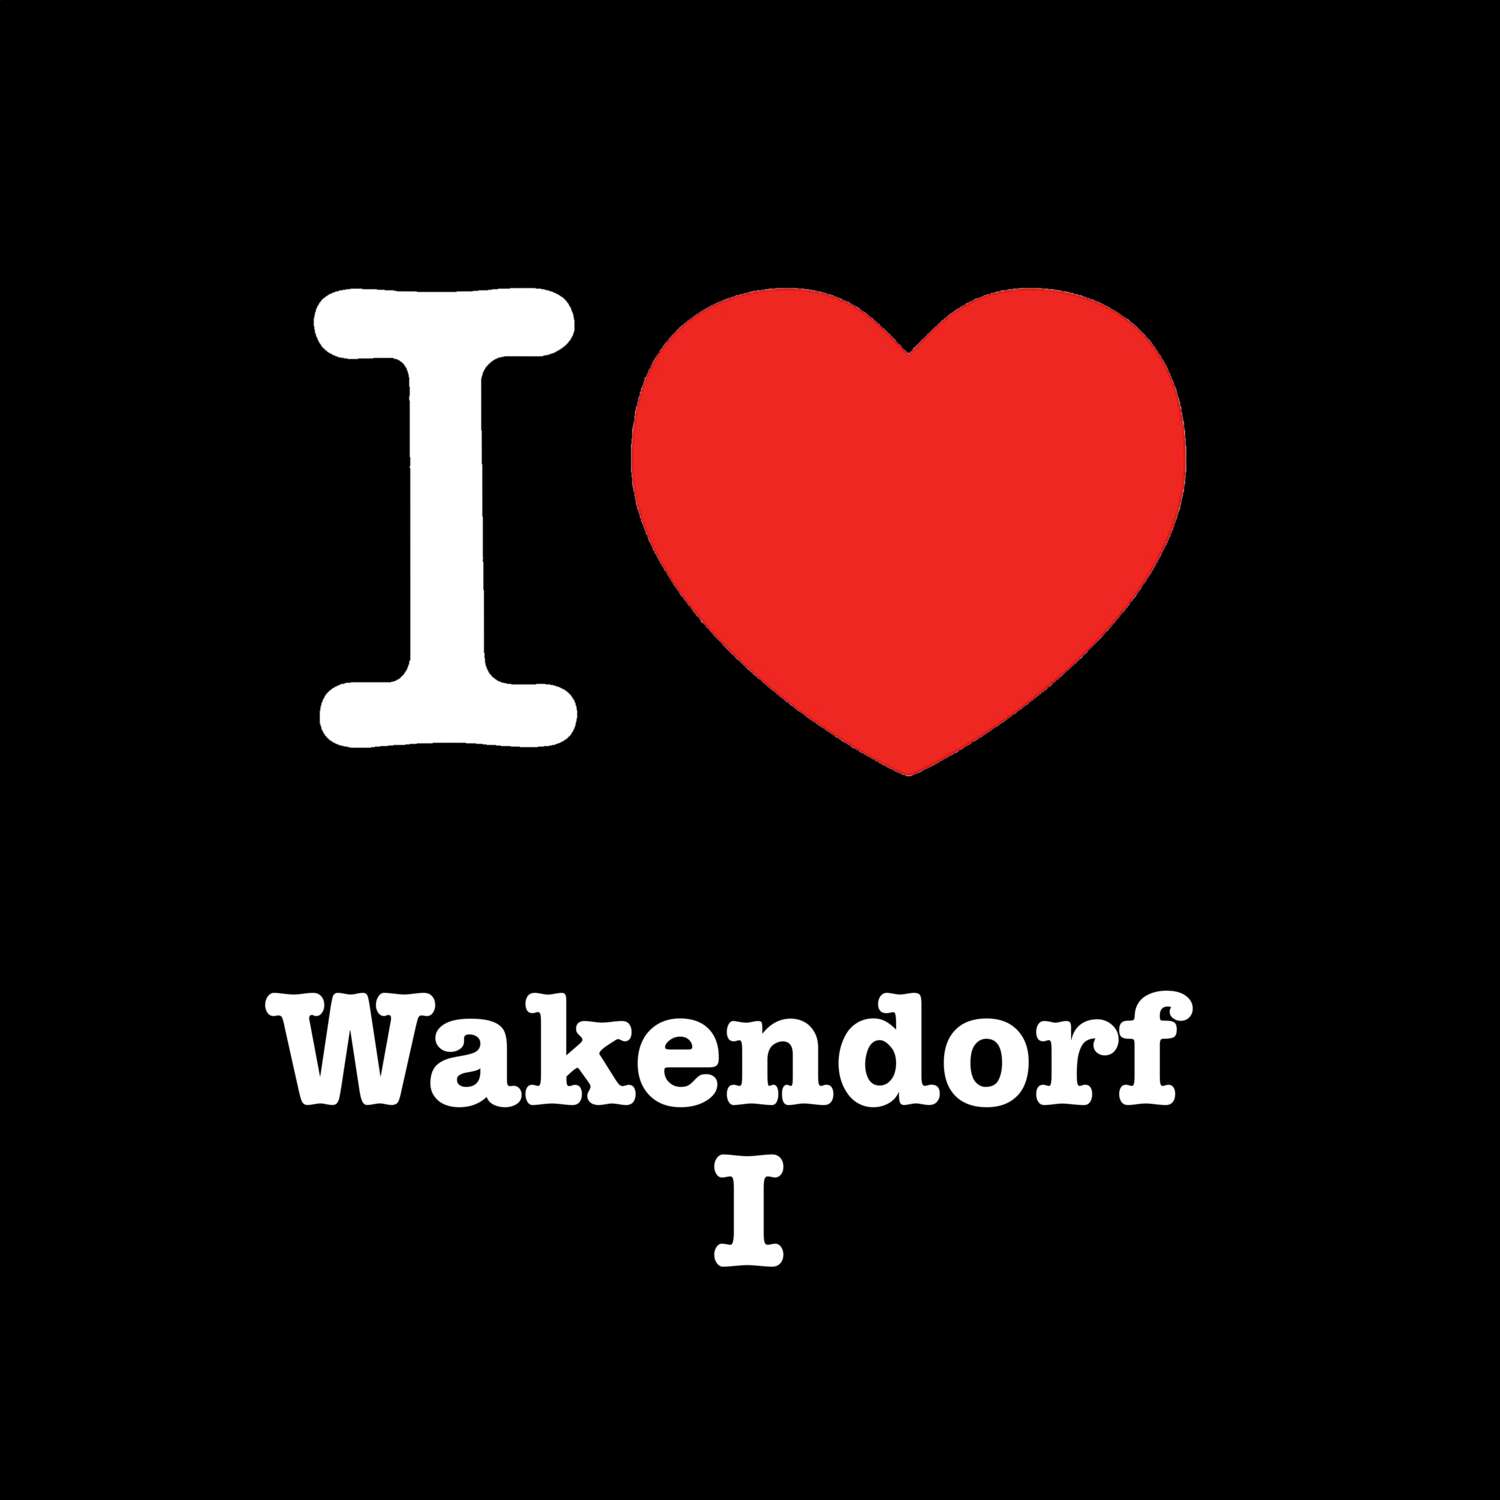 Wakendorf I T-Shirt »I love«